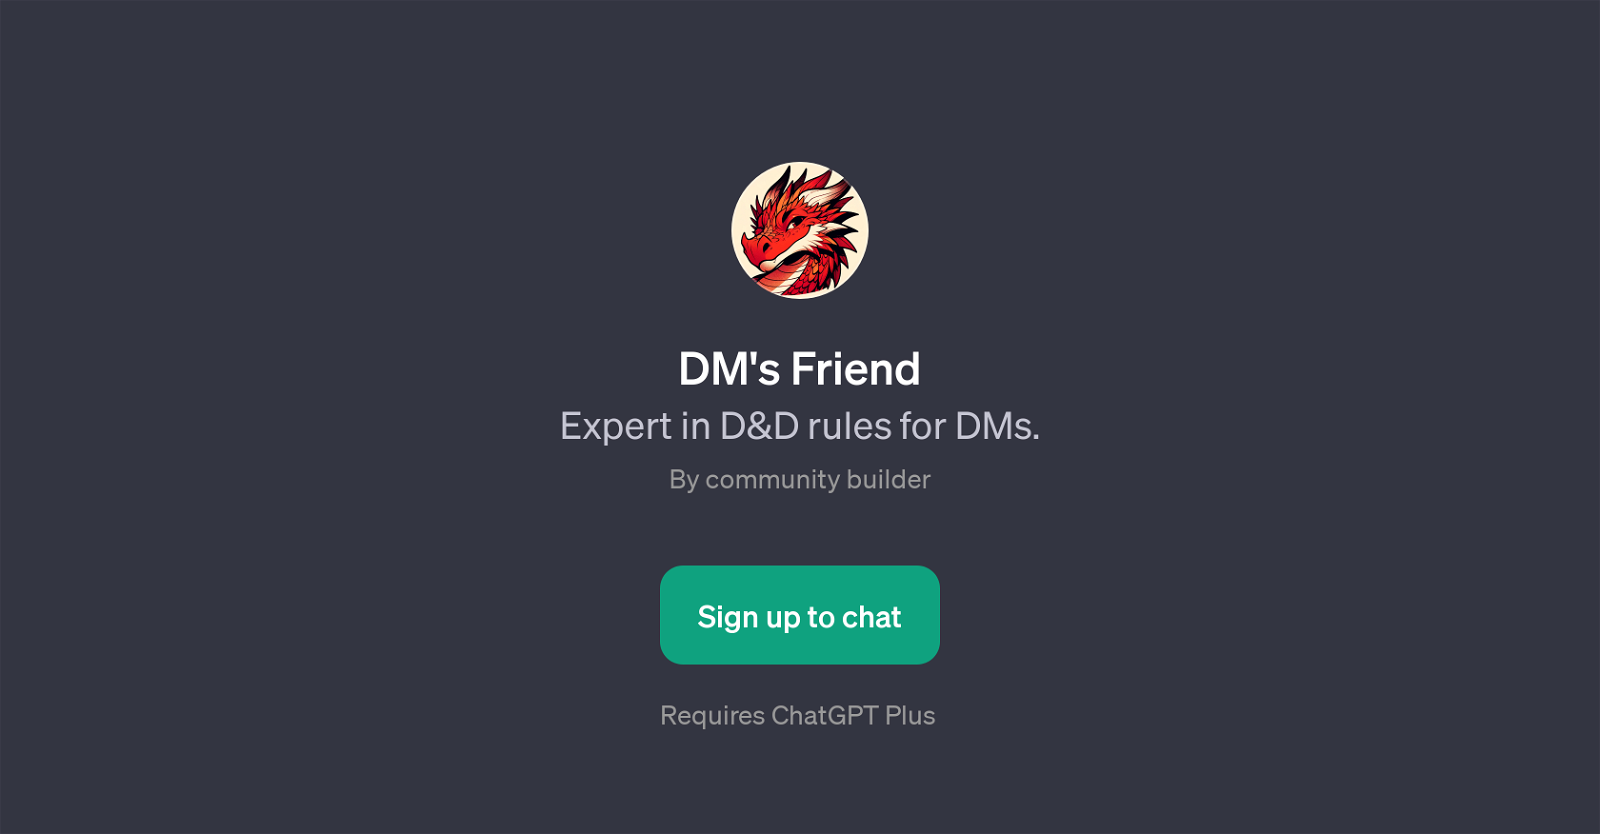 DM's Friend website